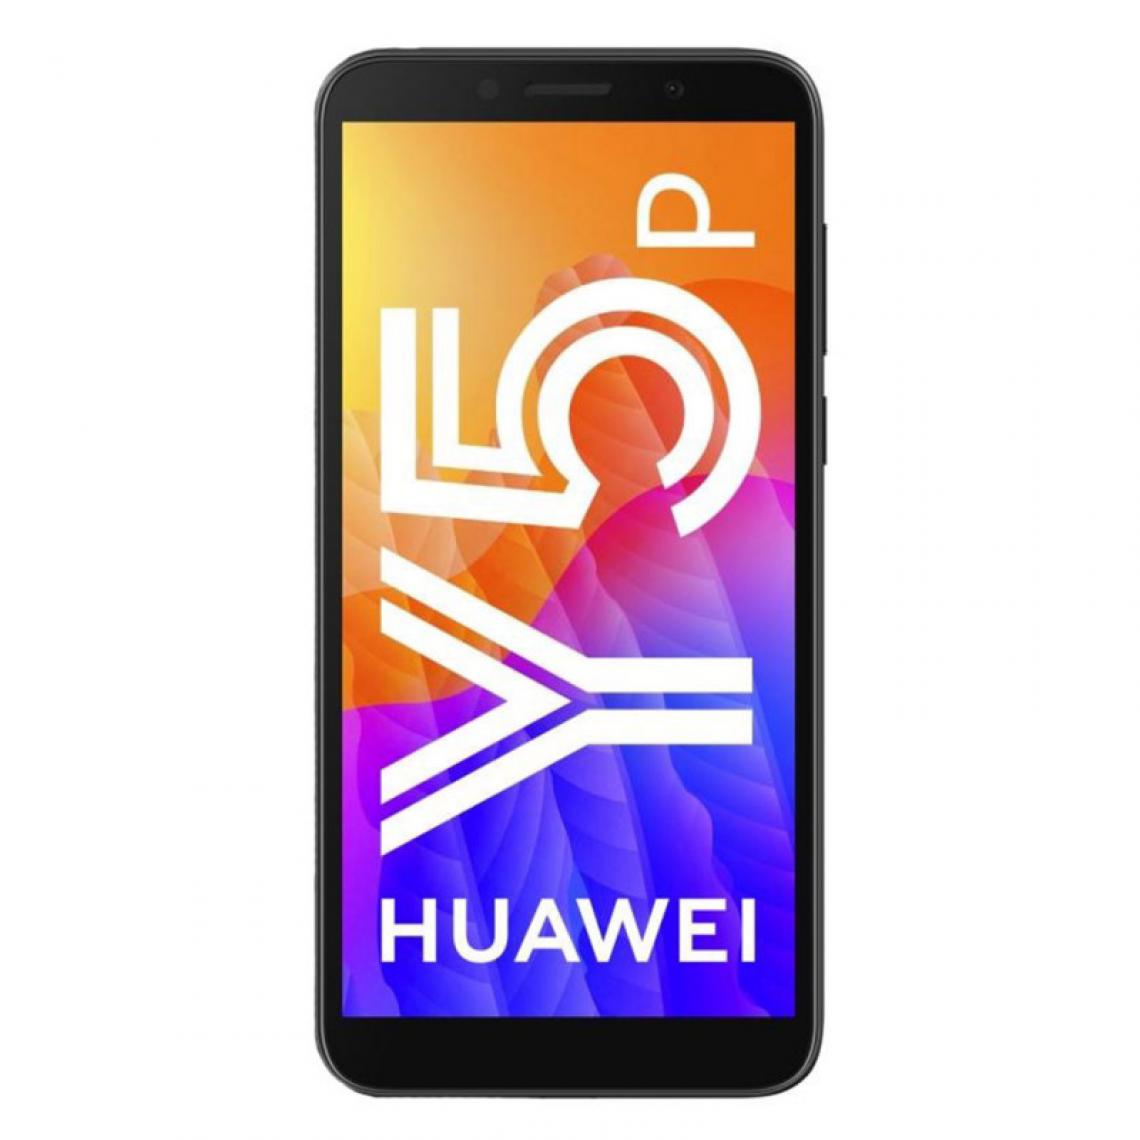 Huawei - Huawei Y5P - Double Sim - 32Go, 2Go RAM - Noir - Smartphone Android